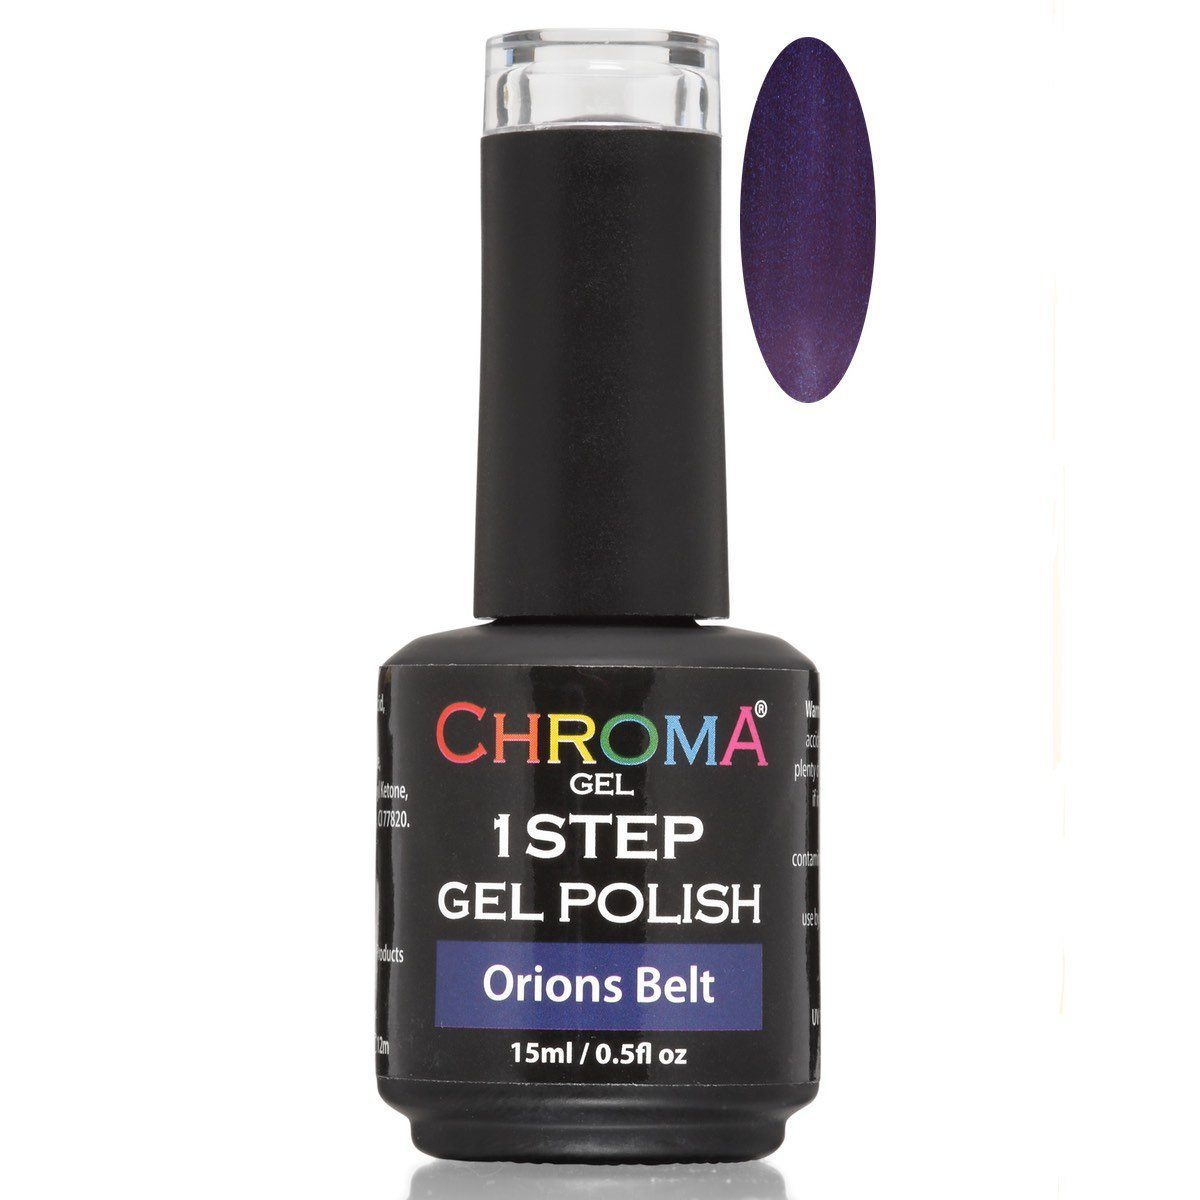 Chroma Gel 1 Step Gel Polish Orions Belt No.53 - Beauty Hair Products LtdChroma Gel